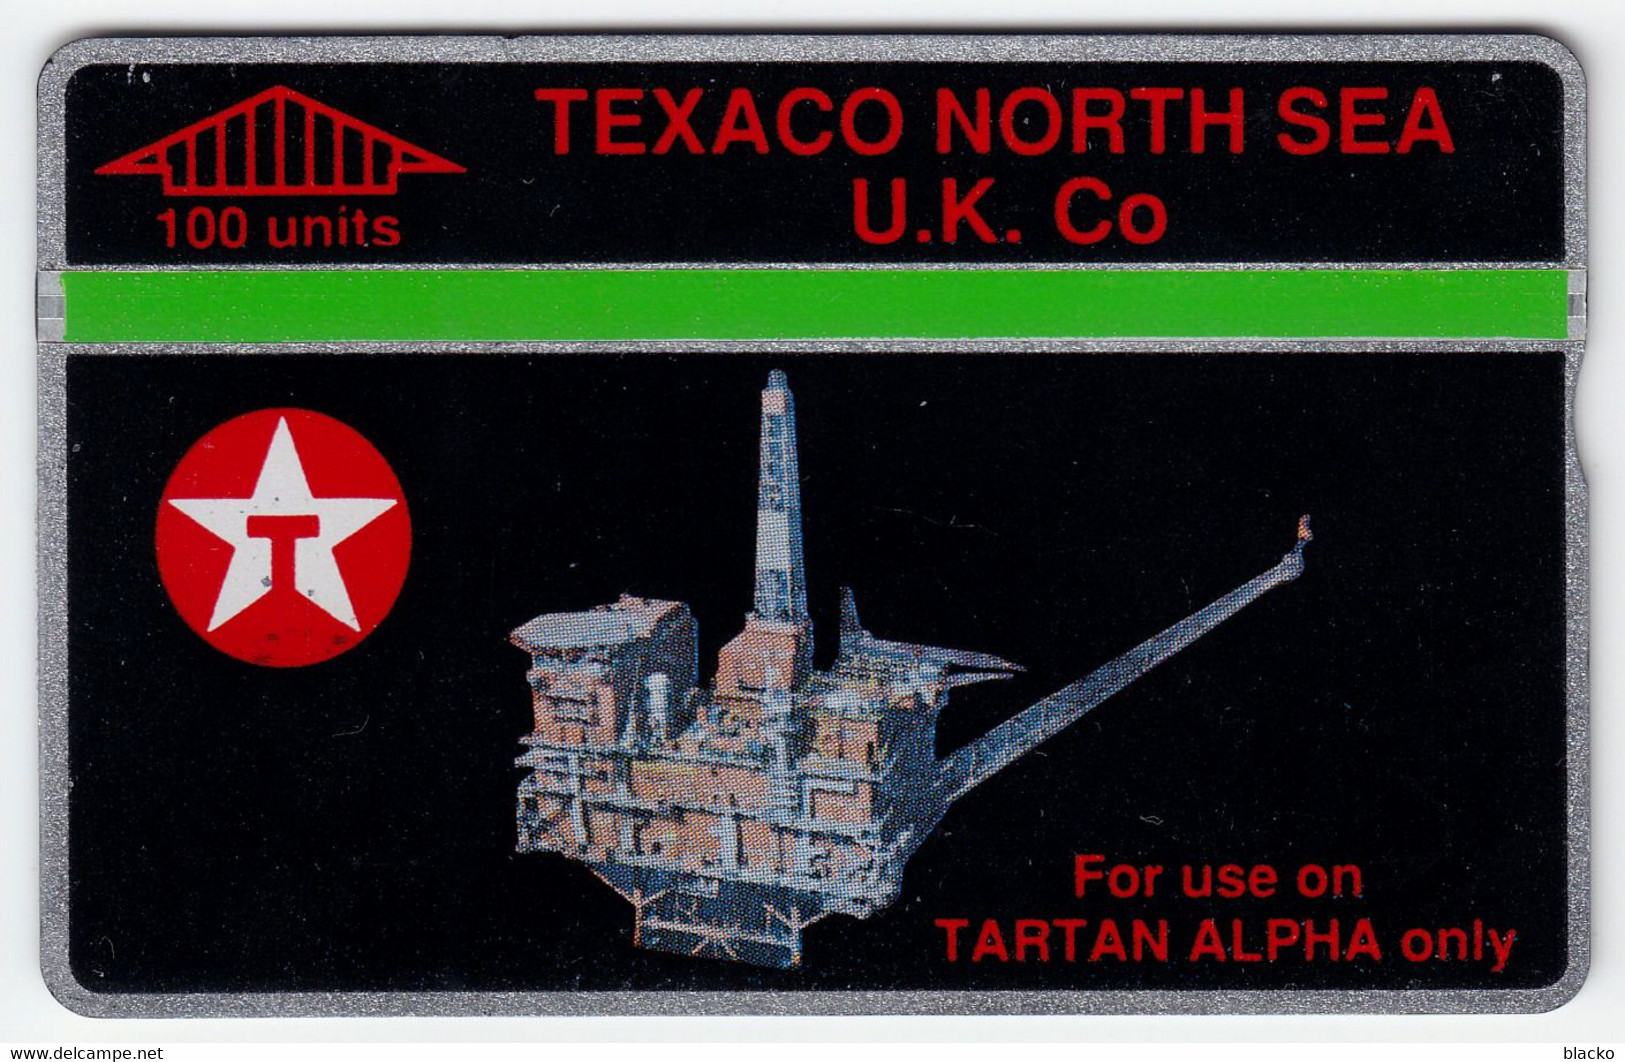 United Kingdom - Oilrig - 1996 068E Texaco North Sea UK Co. Black Card - Tartan Alpha - 17968ex Dbz04 - [ 2] Plataformas Petroleras